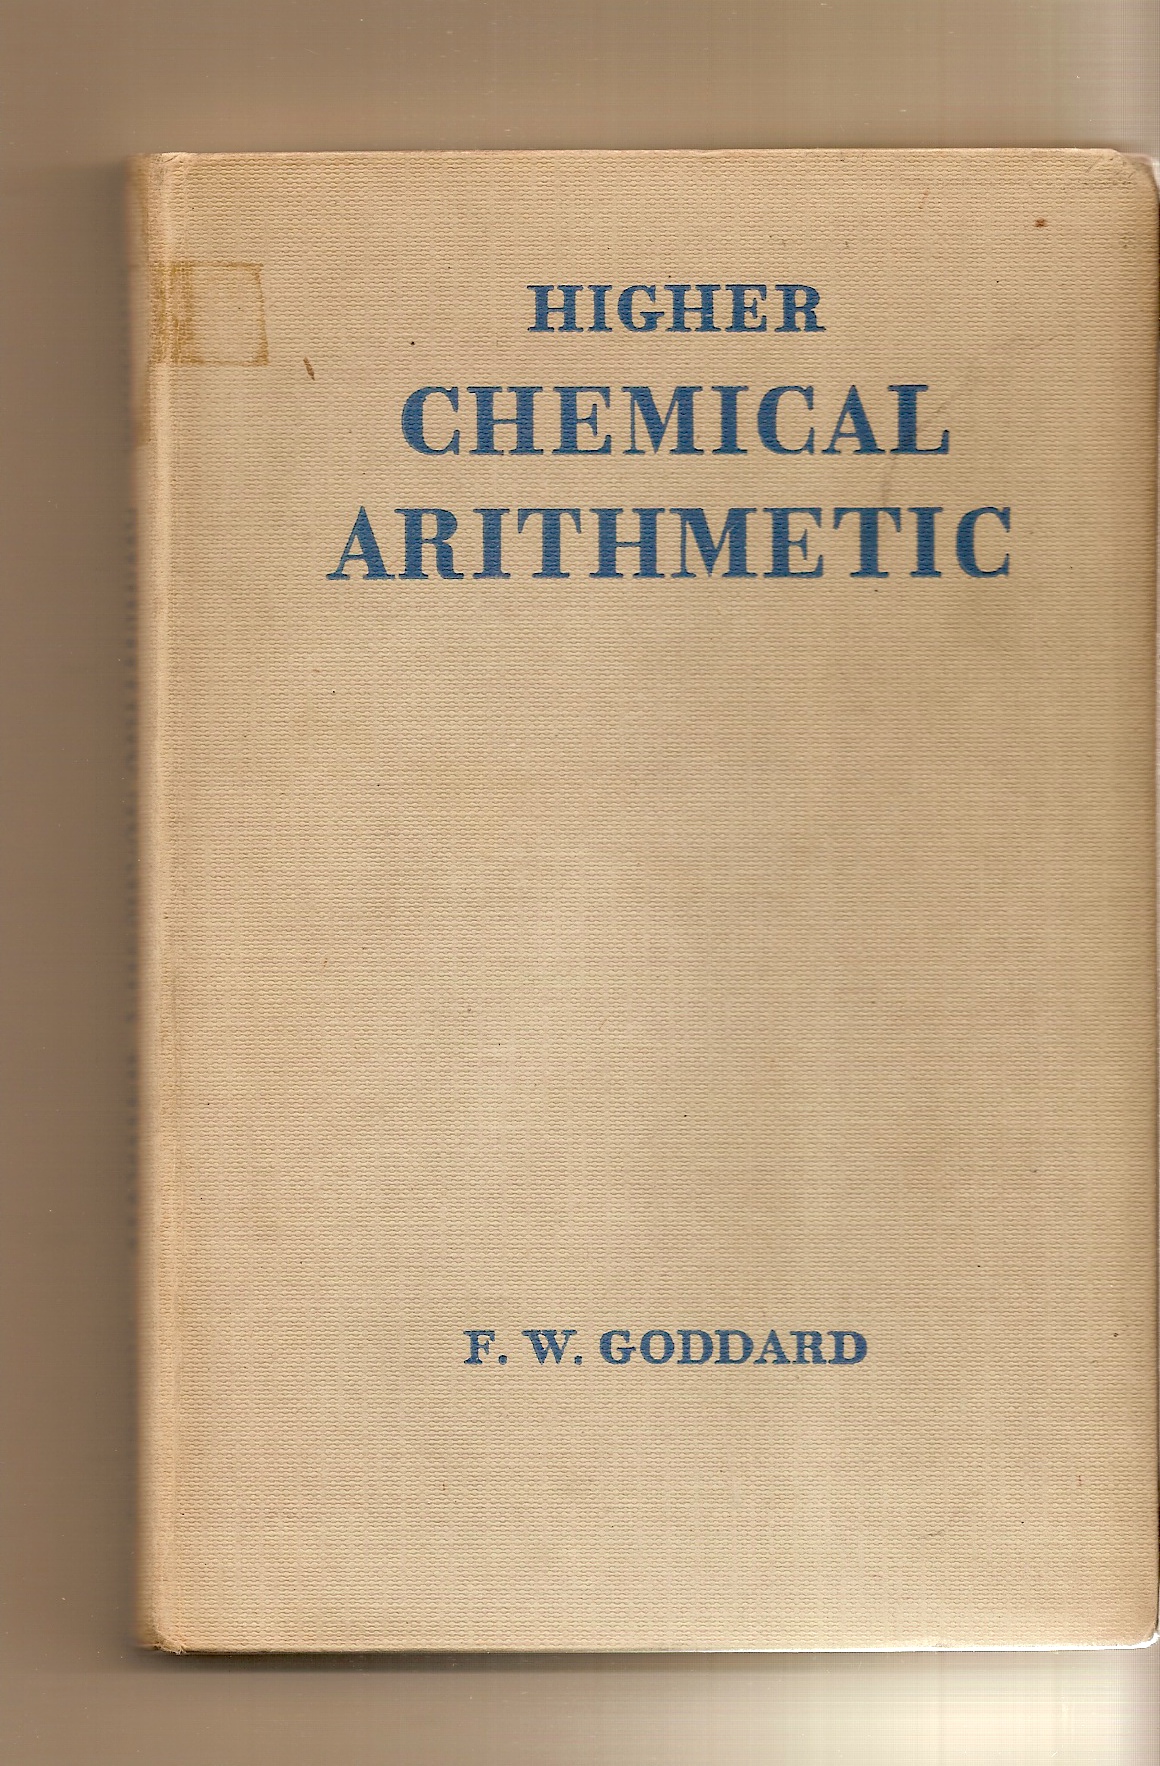 GODDARD F. W. - Higher Chemical Arithmetic